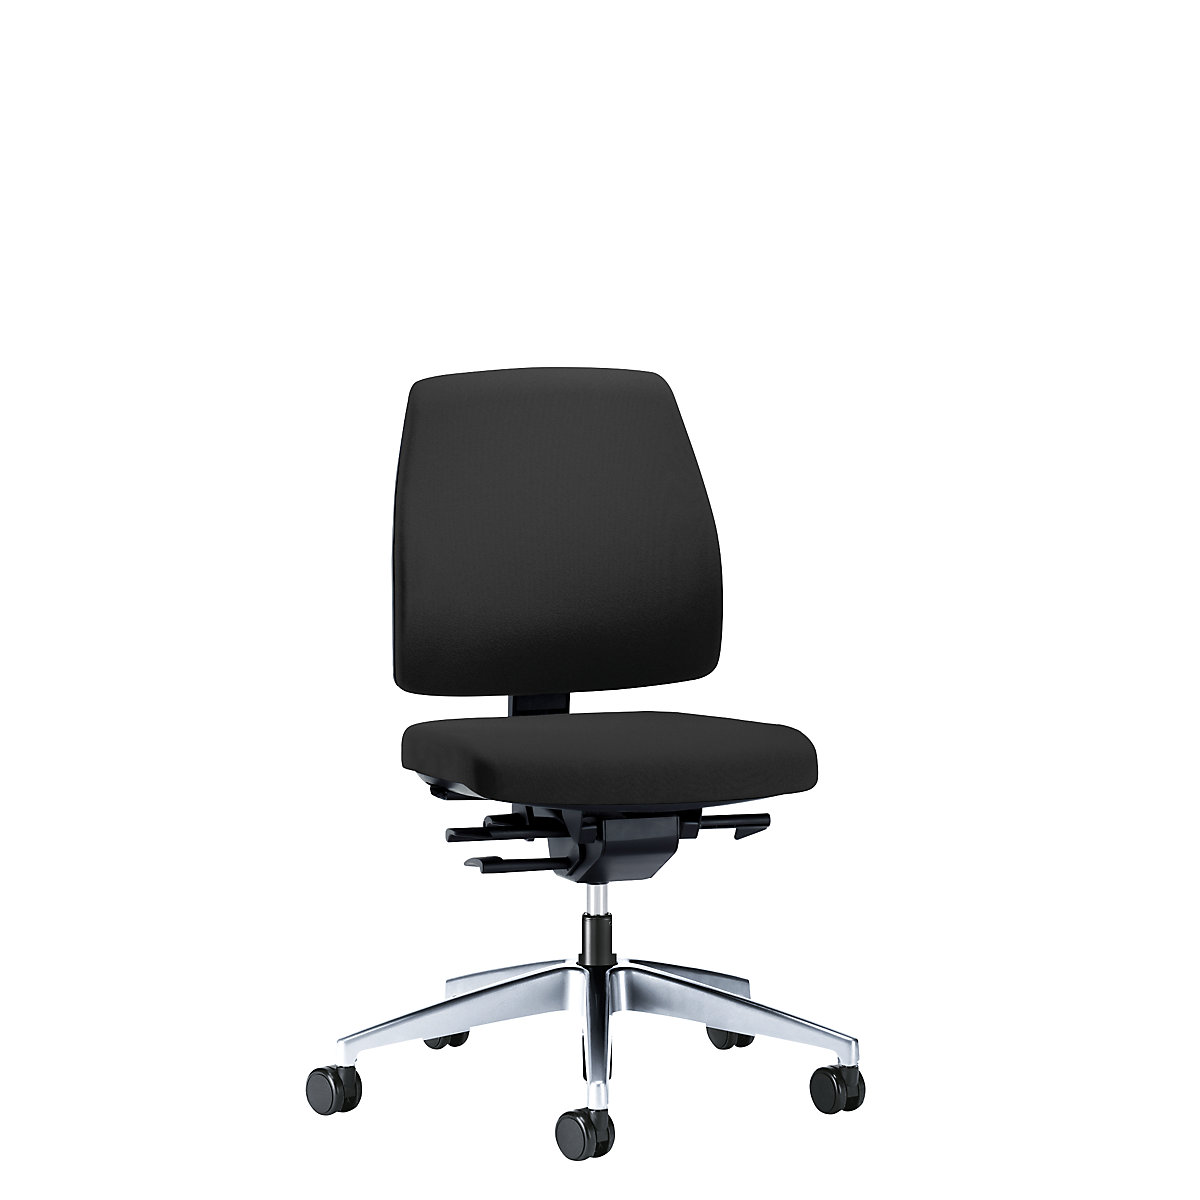 GOAL office swivel chair, back rest height 430 mm - interstuhl